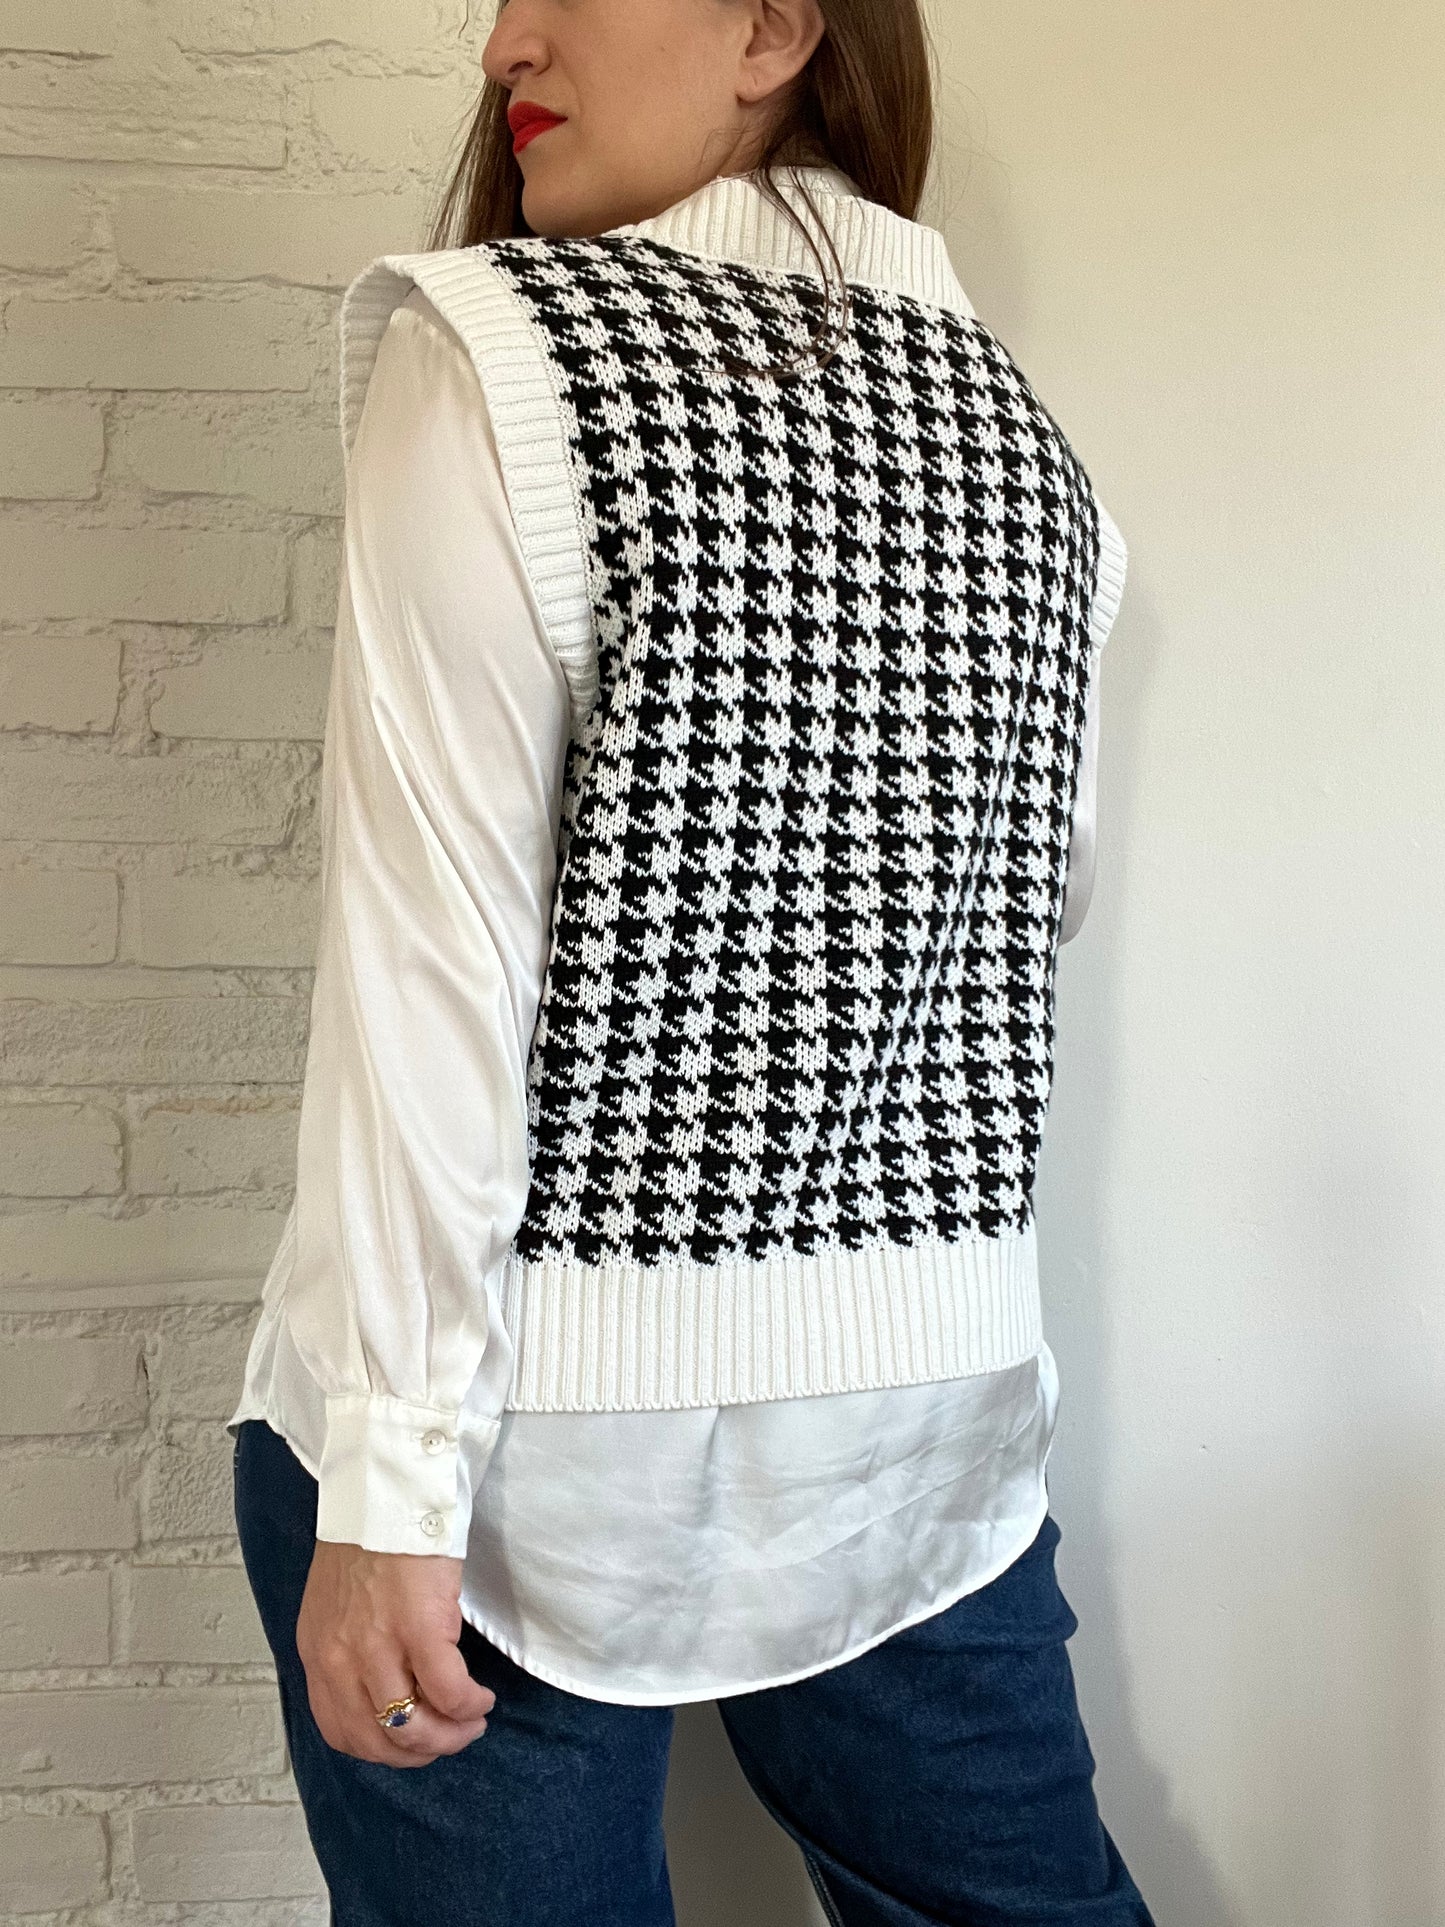 Houndstooth Vest Knit Sweater - L/XL